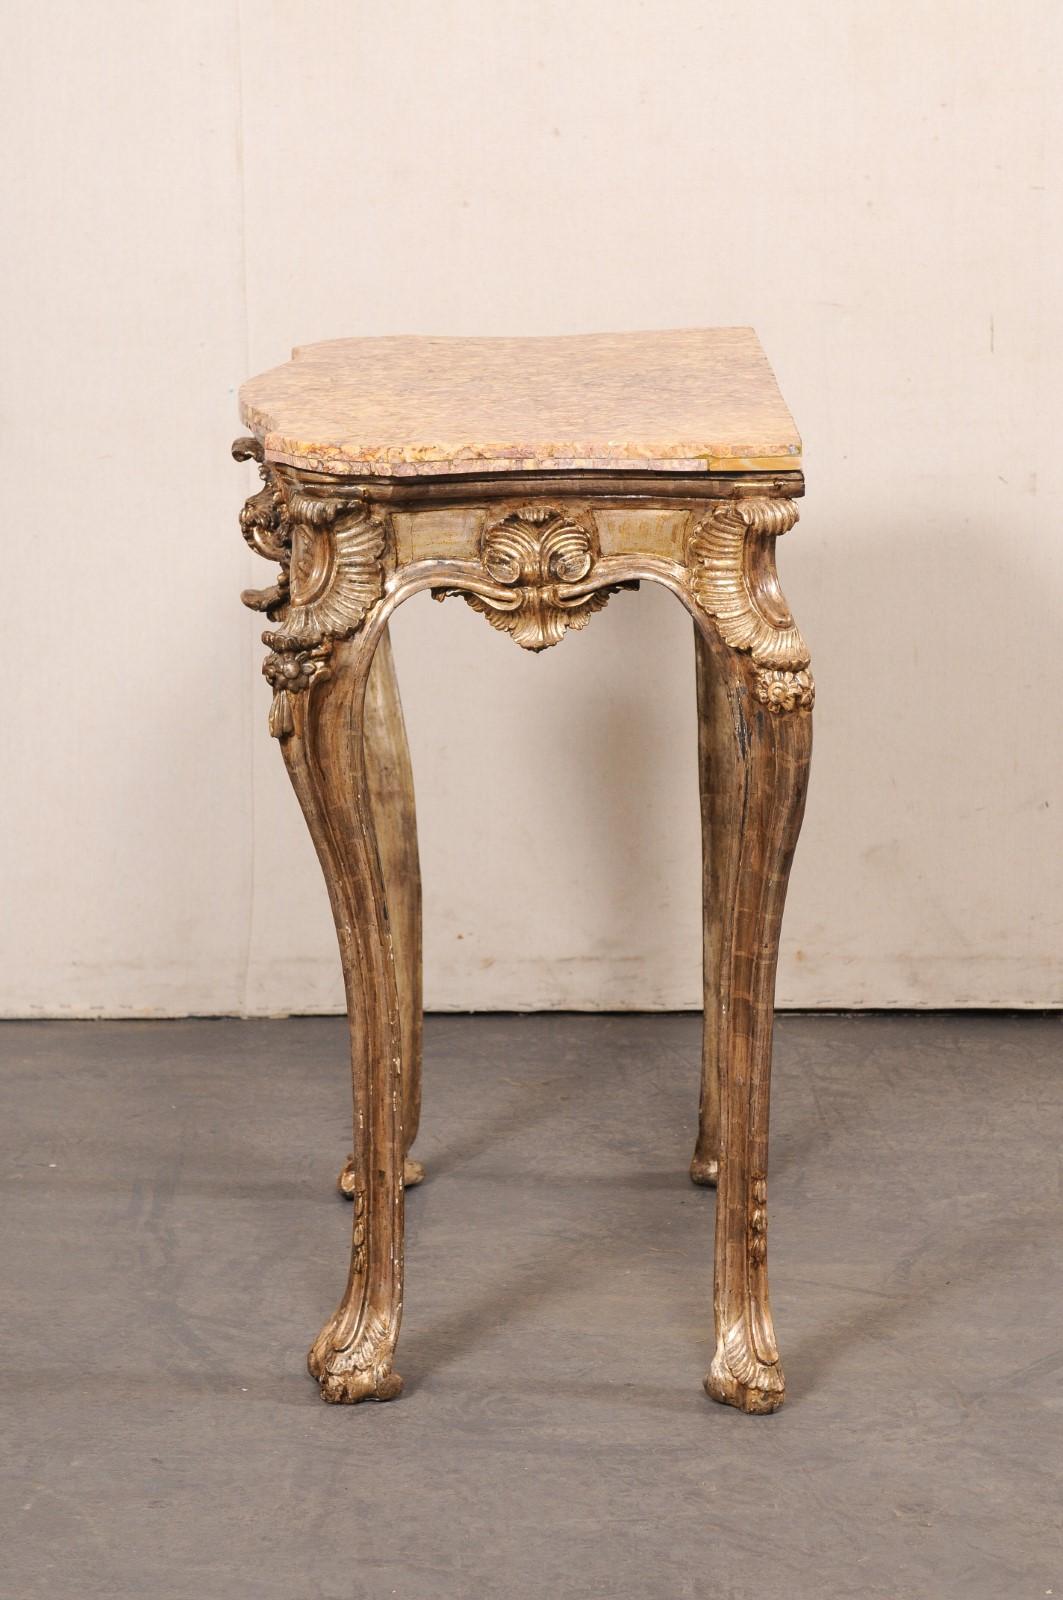 Italian Period Rococo Ornate Accent Table w/its Original Finish & Marble Top For Sale 5